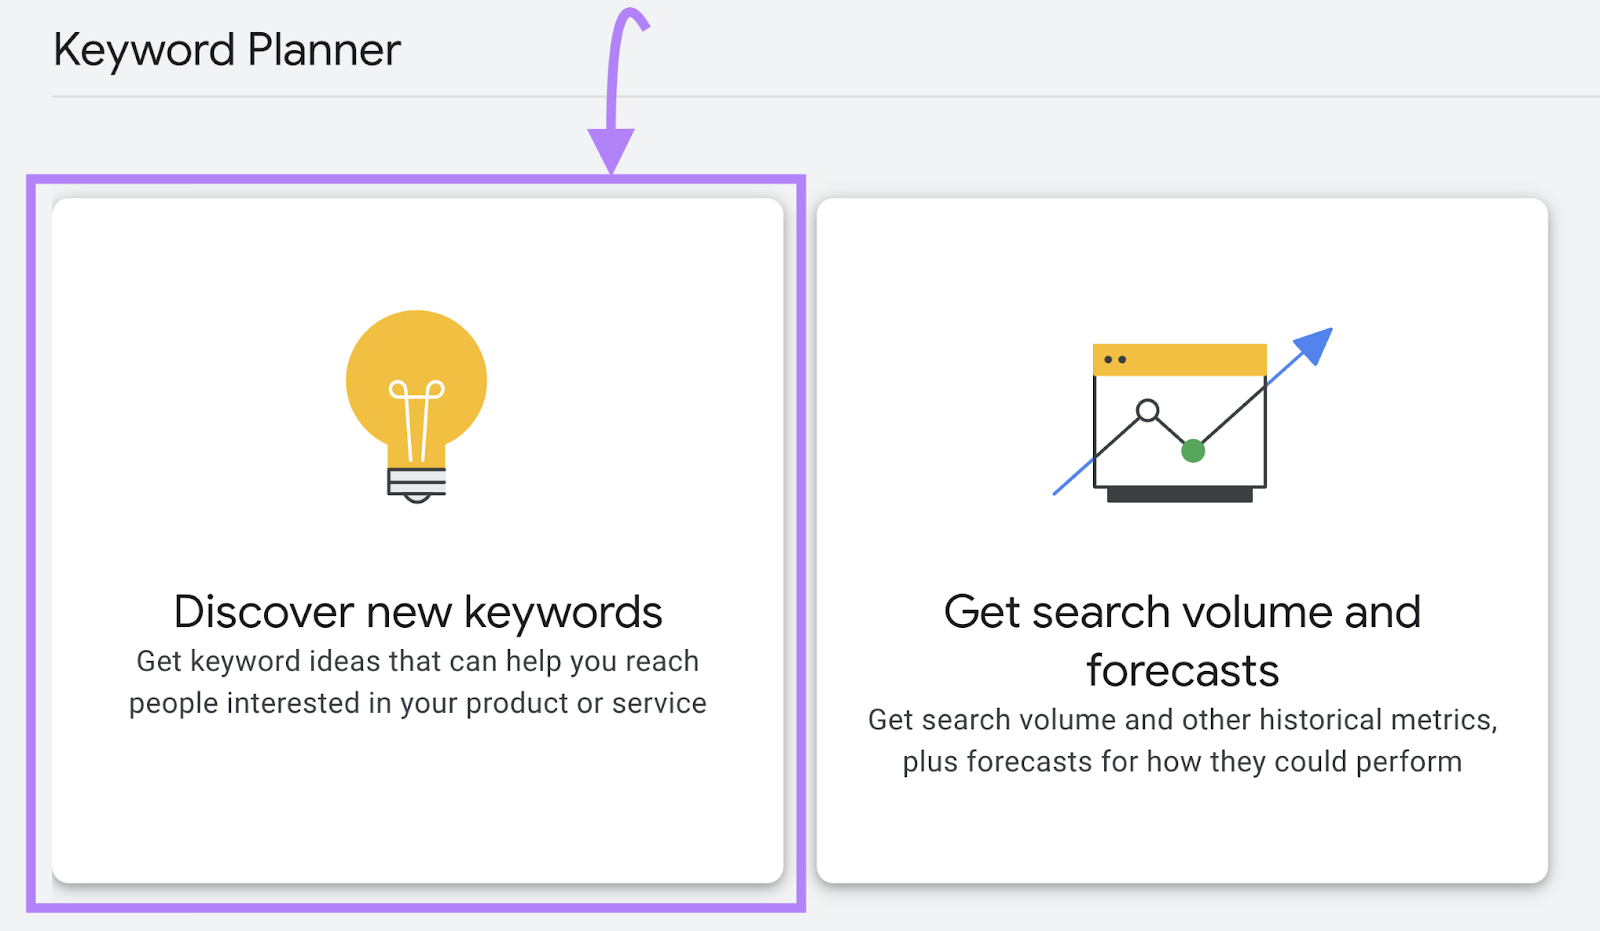 "Discover new keywords" widget selected under Keyword Planner